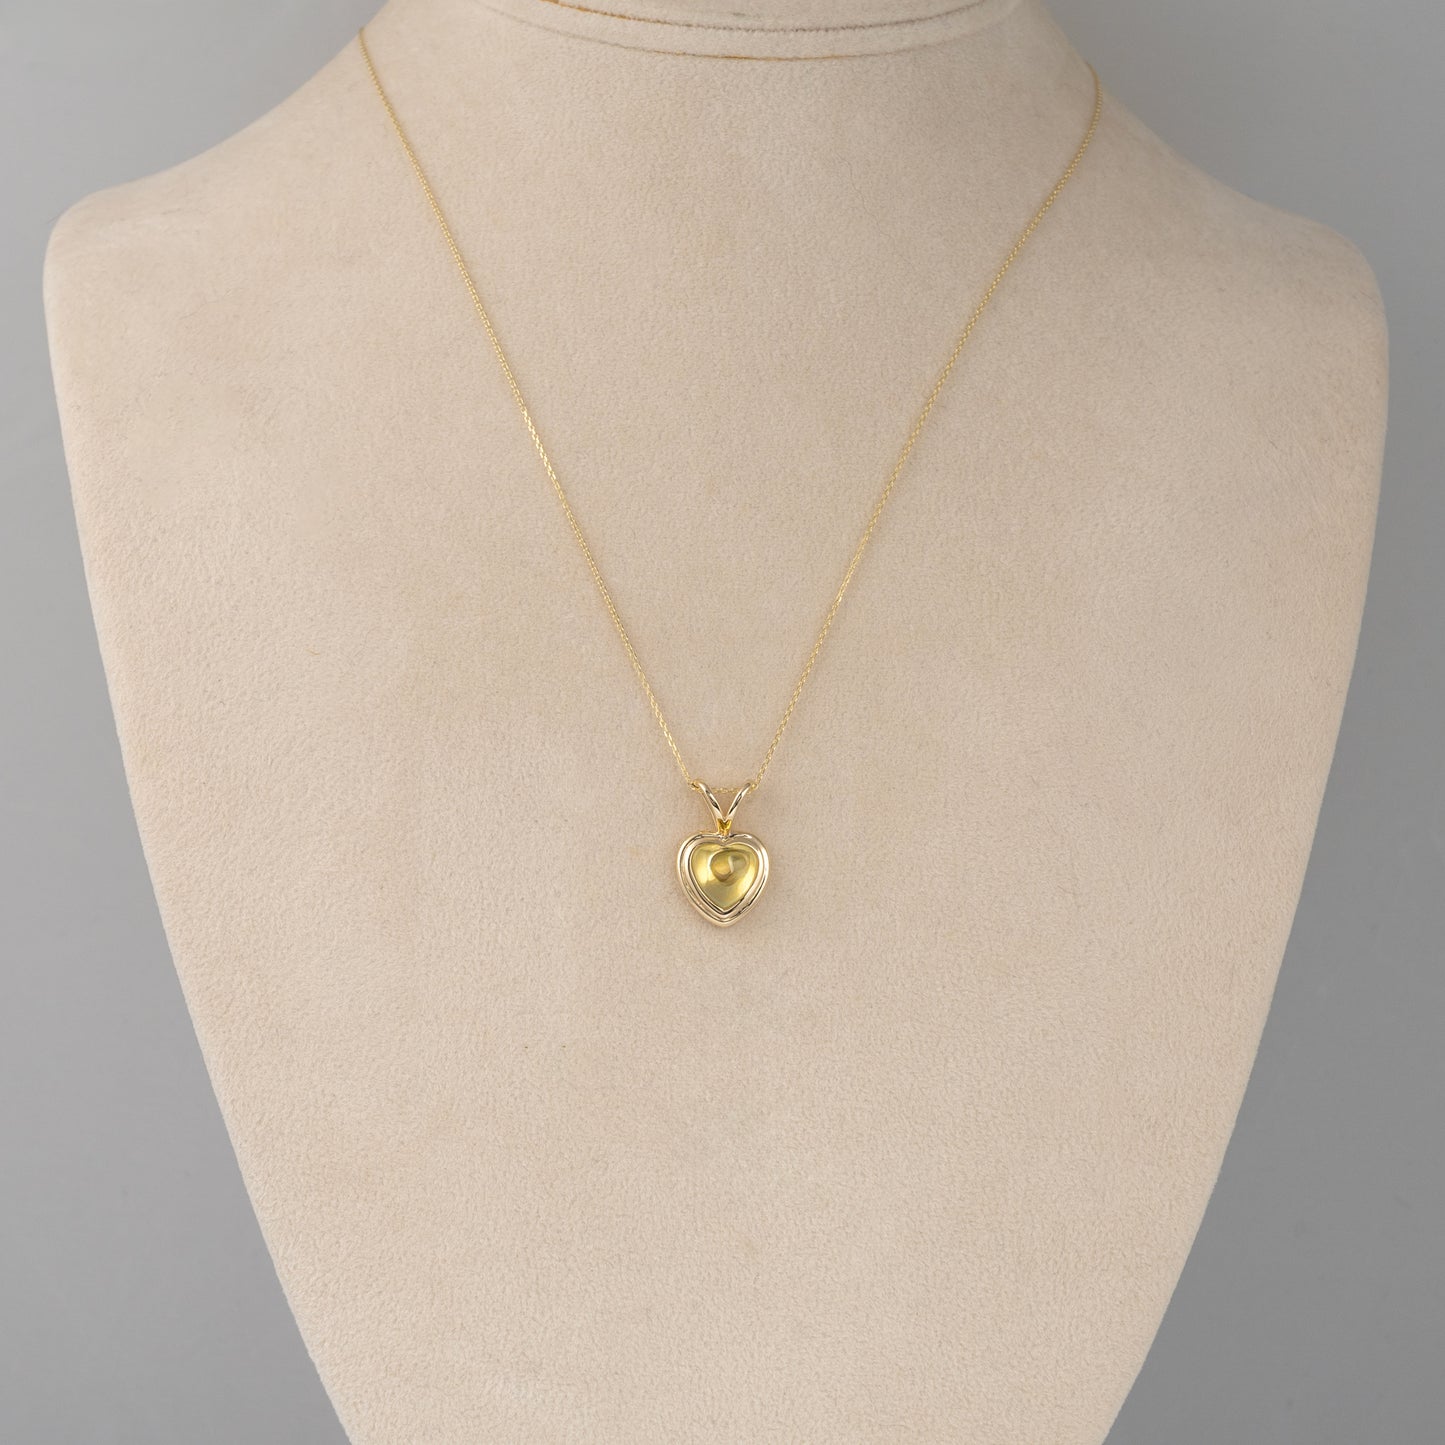 lemon quartz pendant necklace on dshop isplay bust